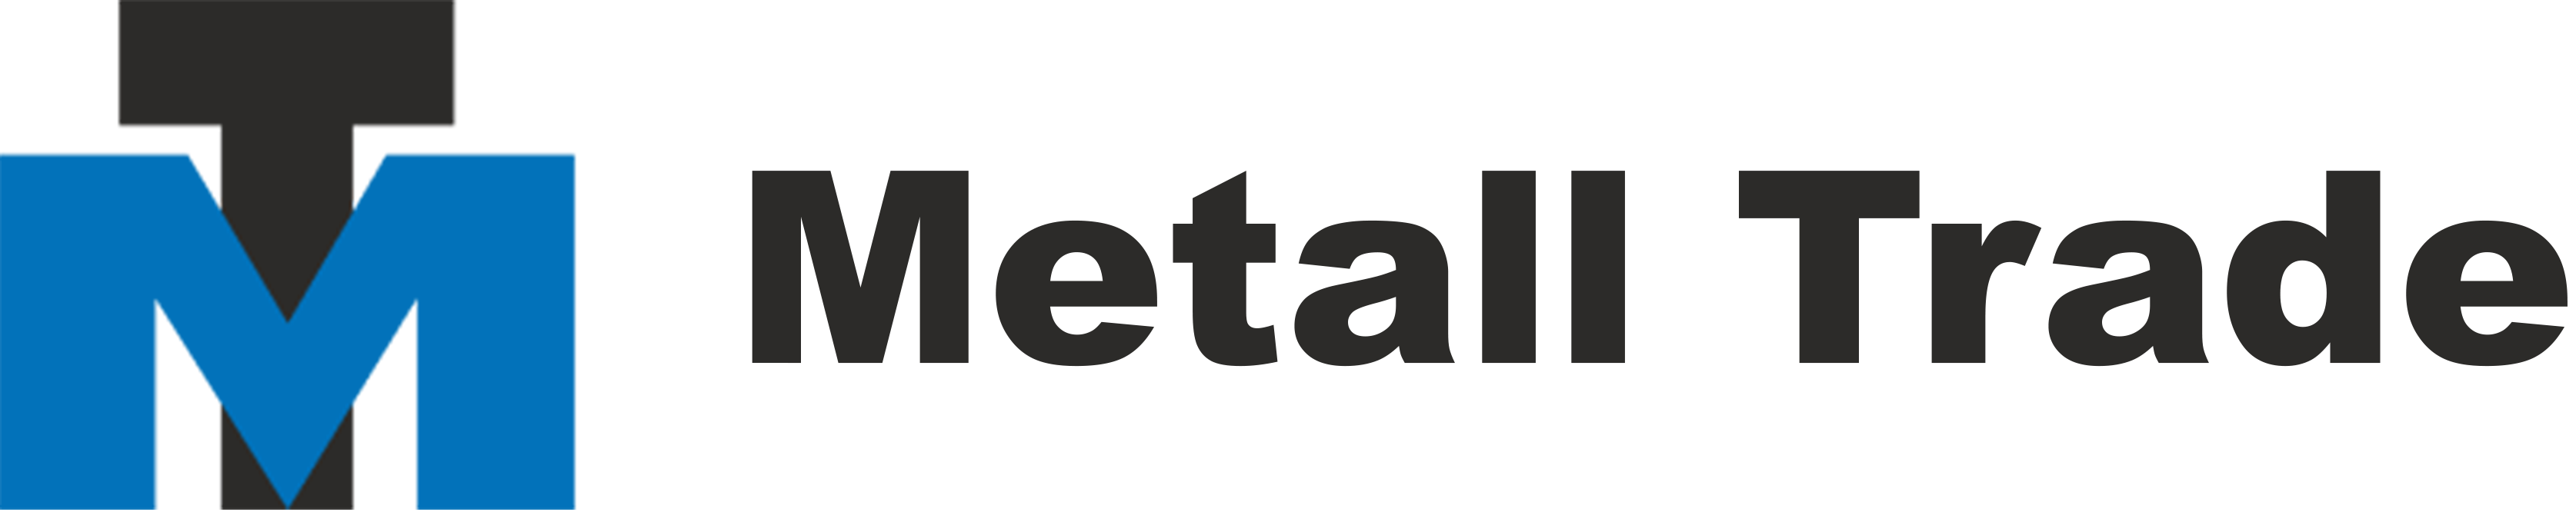 «Metall Trade LLC»